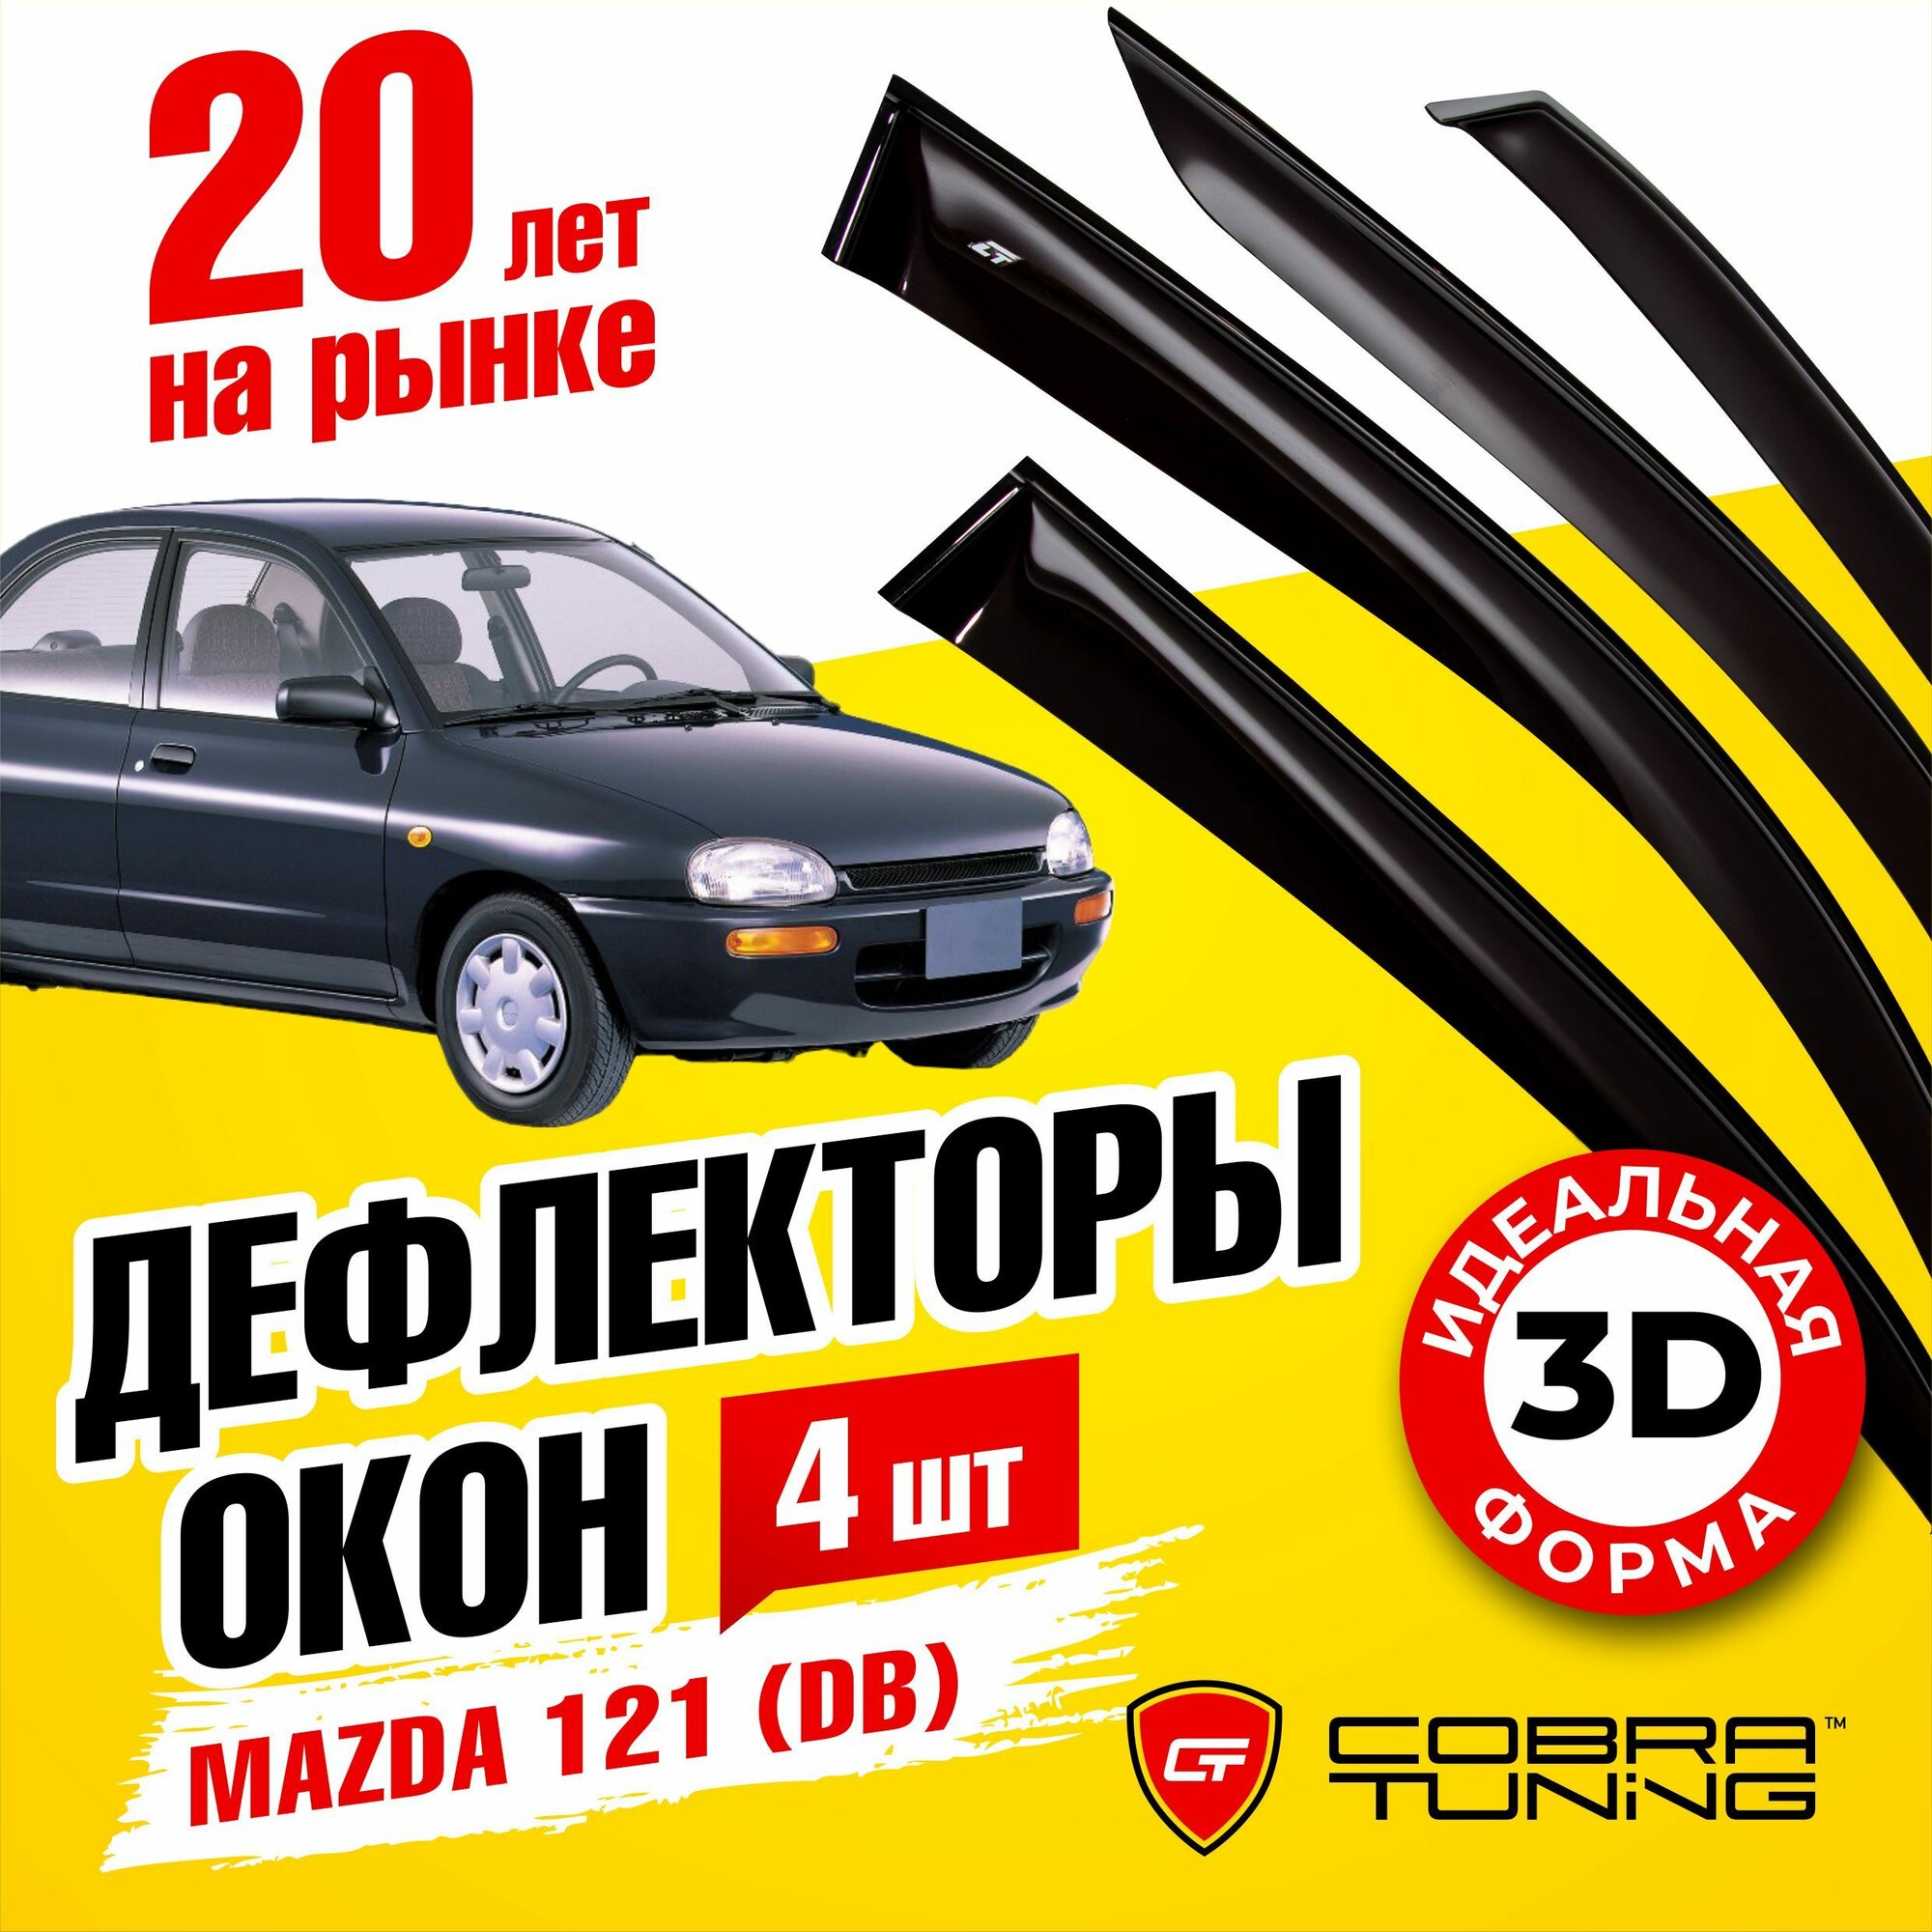 Дефлекторы боковых окон для Mazda 121 (Мазда) DB седан 1991-1996, ветровики на двери автомобиля, Cobra Tuning